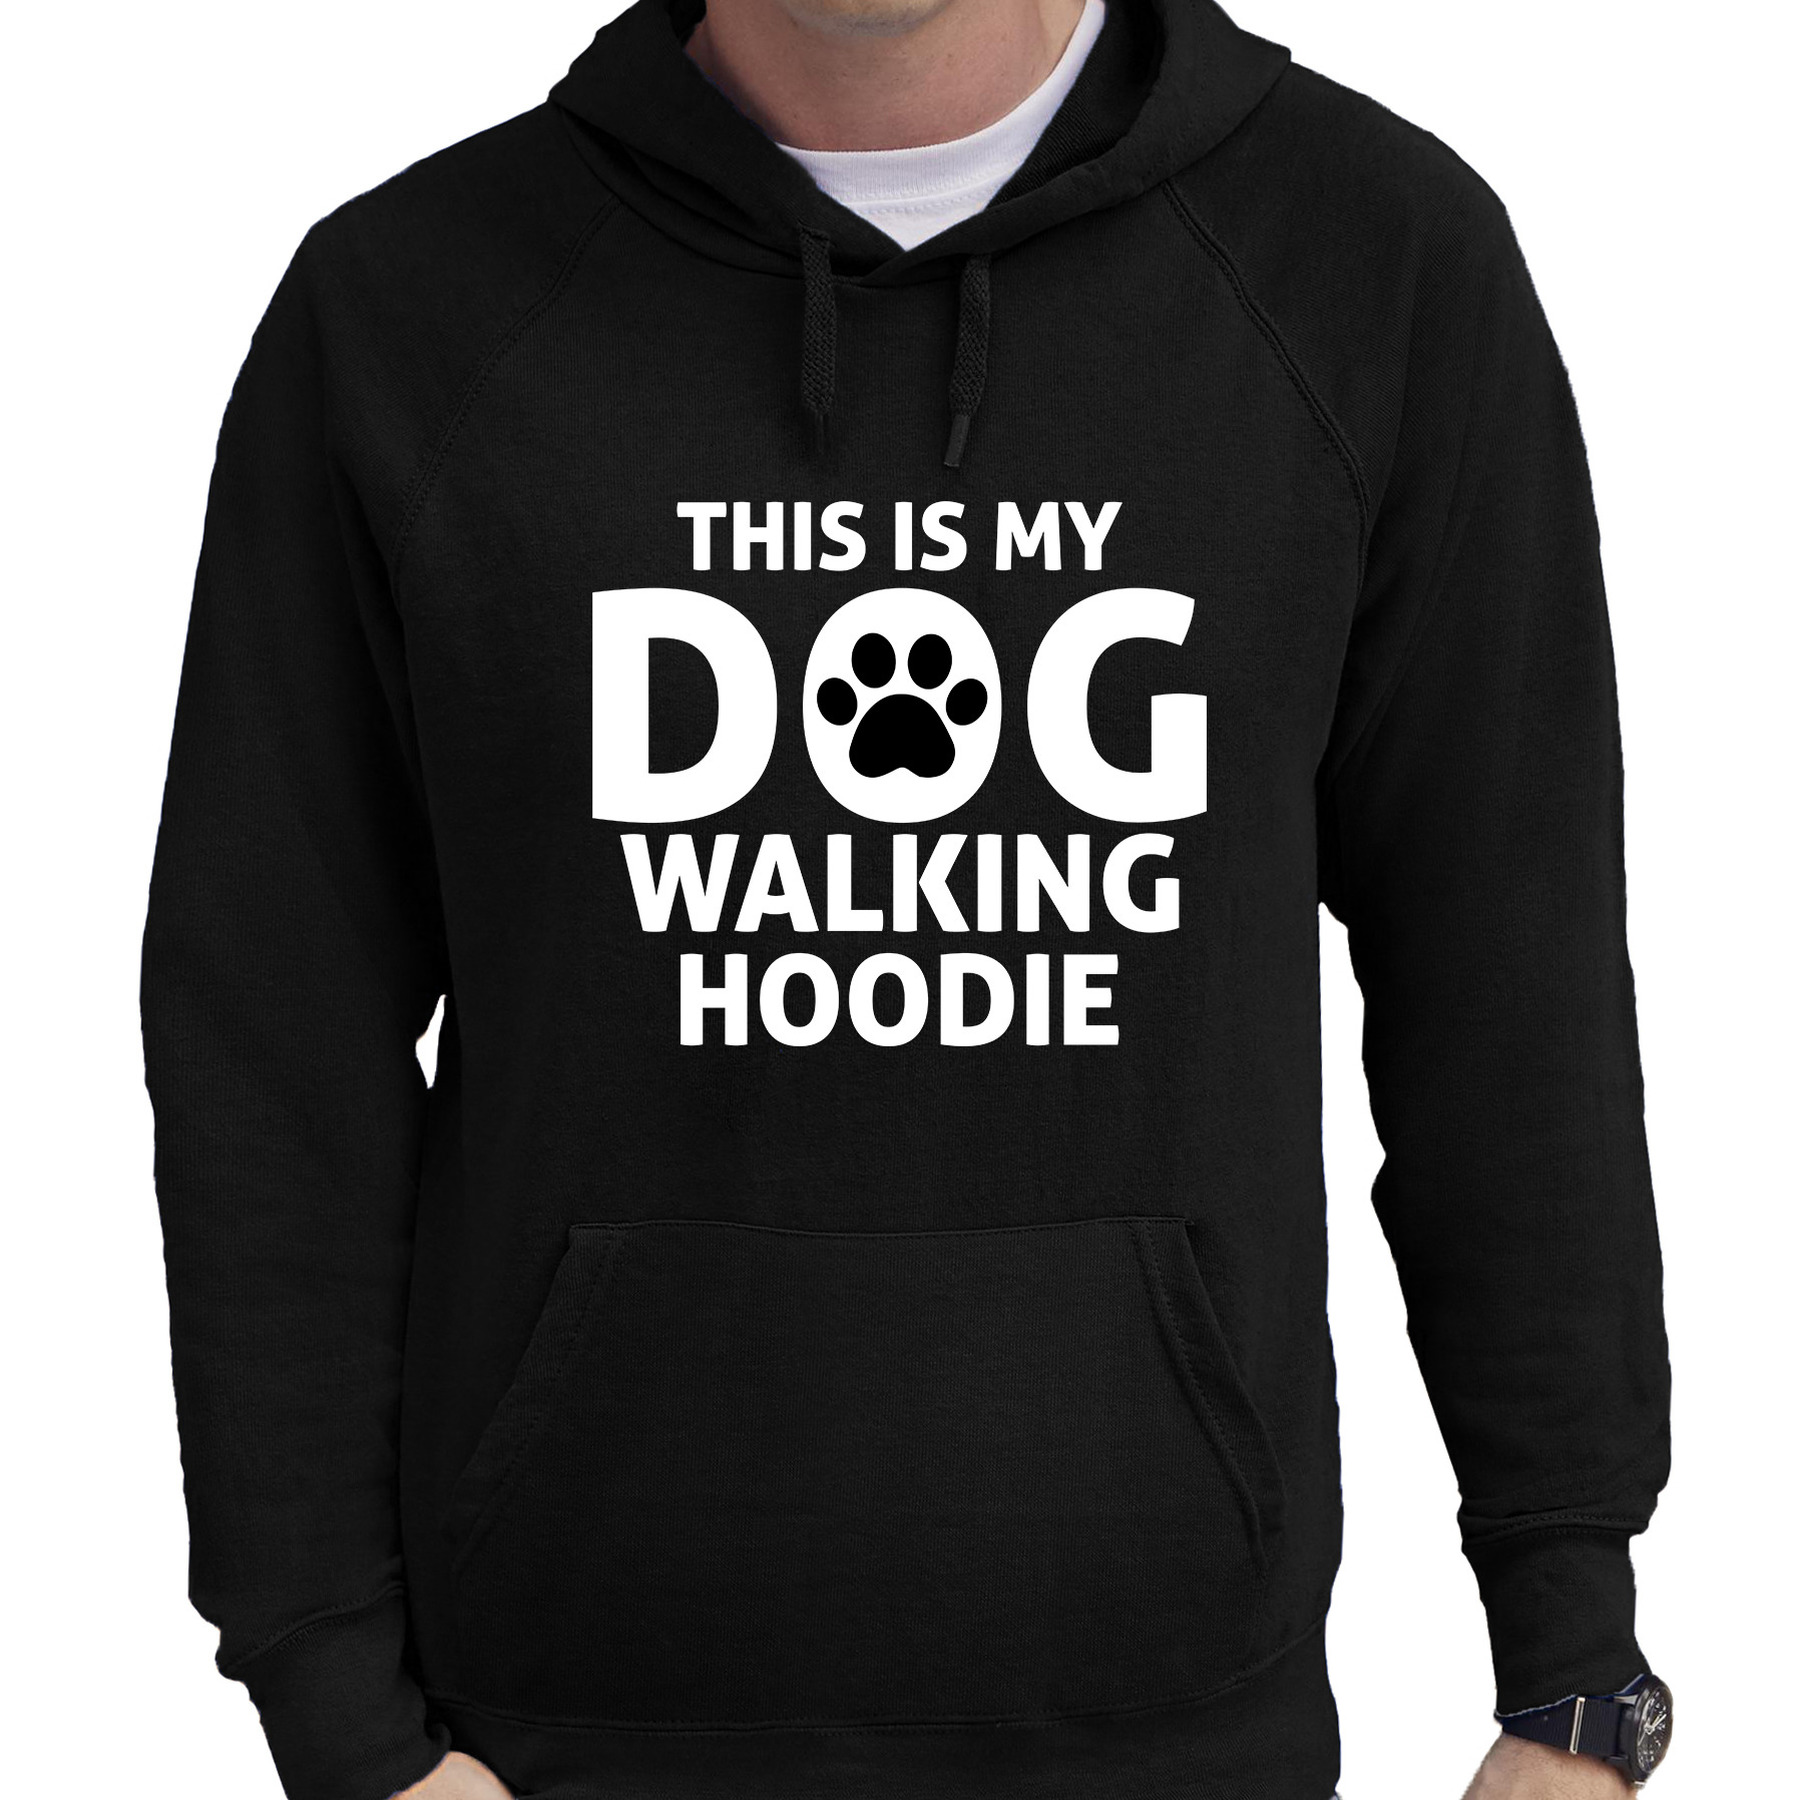 Dog walking hoodie fun tekst bankhanger hoodie voor heren zwart